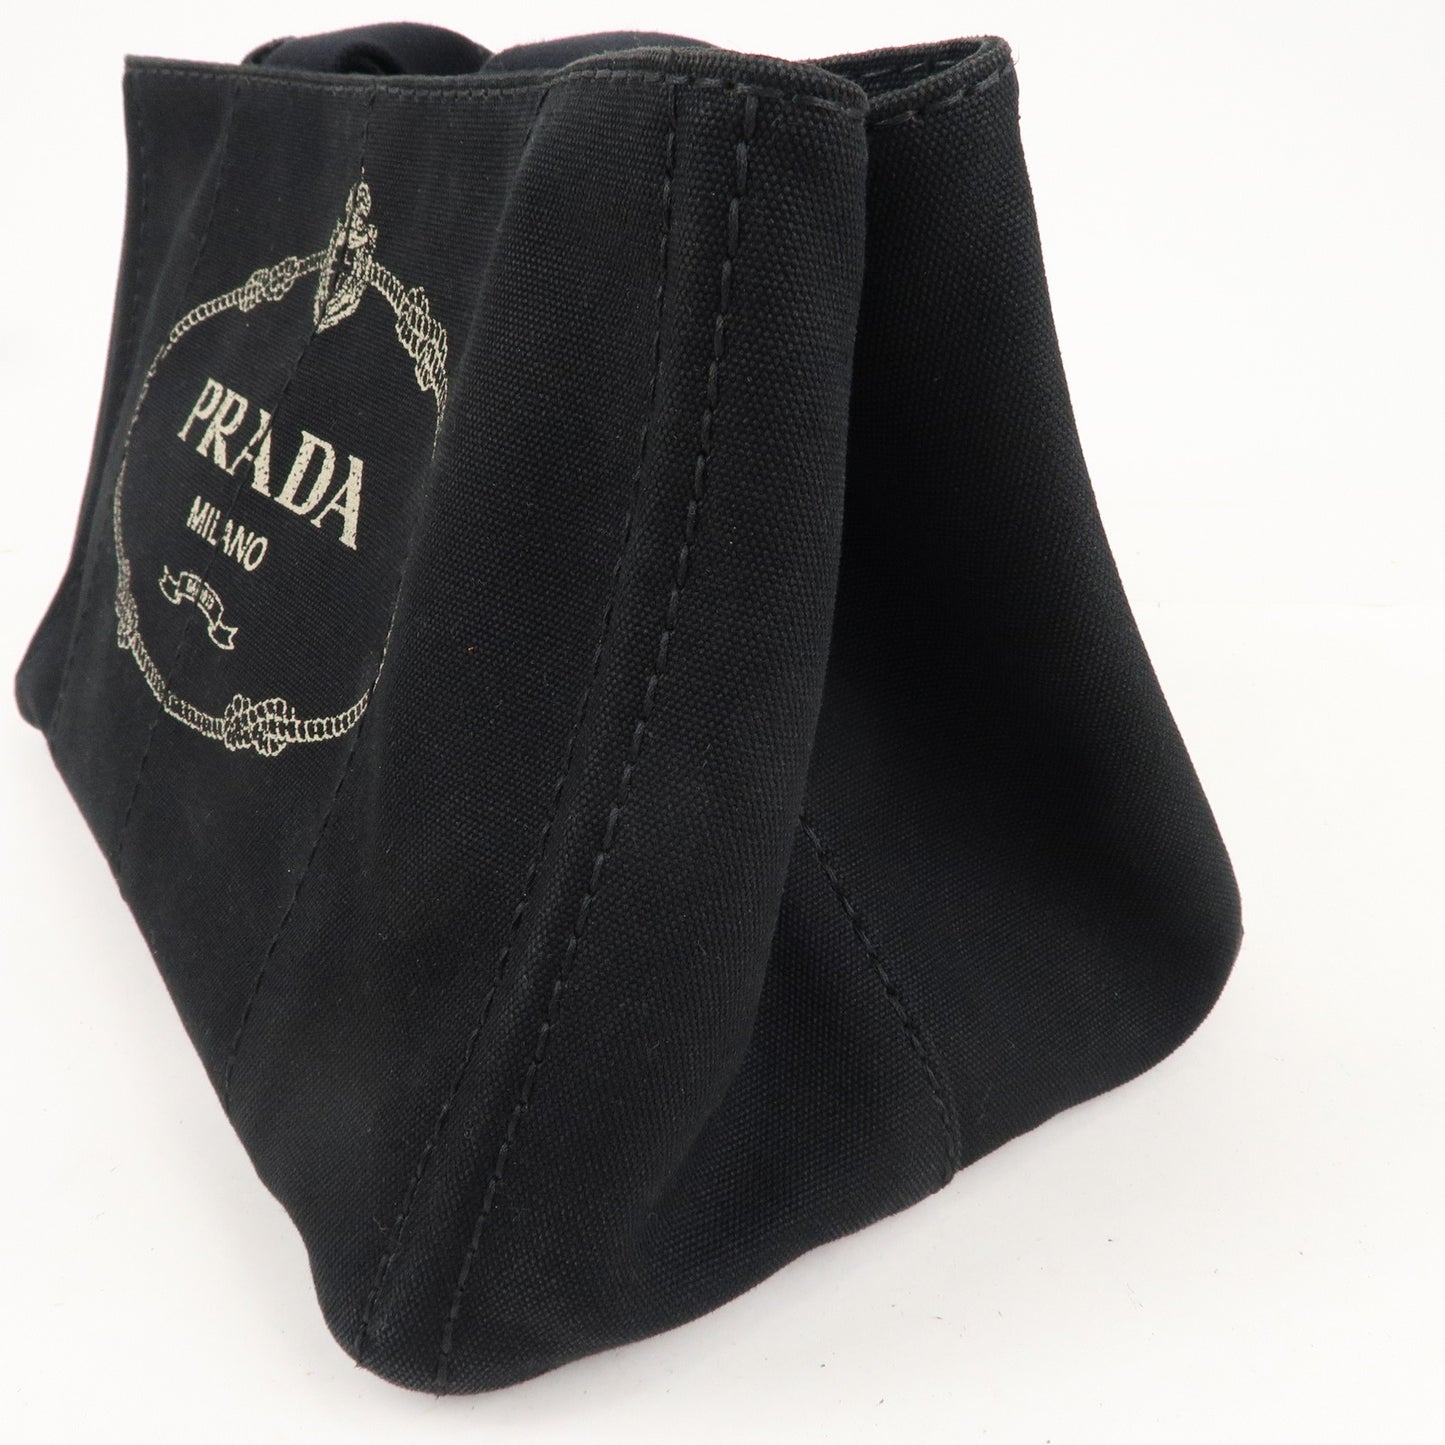 PRADA Canapa Canvas Tote Bag Hand Bag Black BN1877